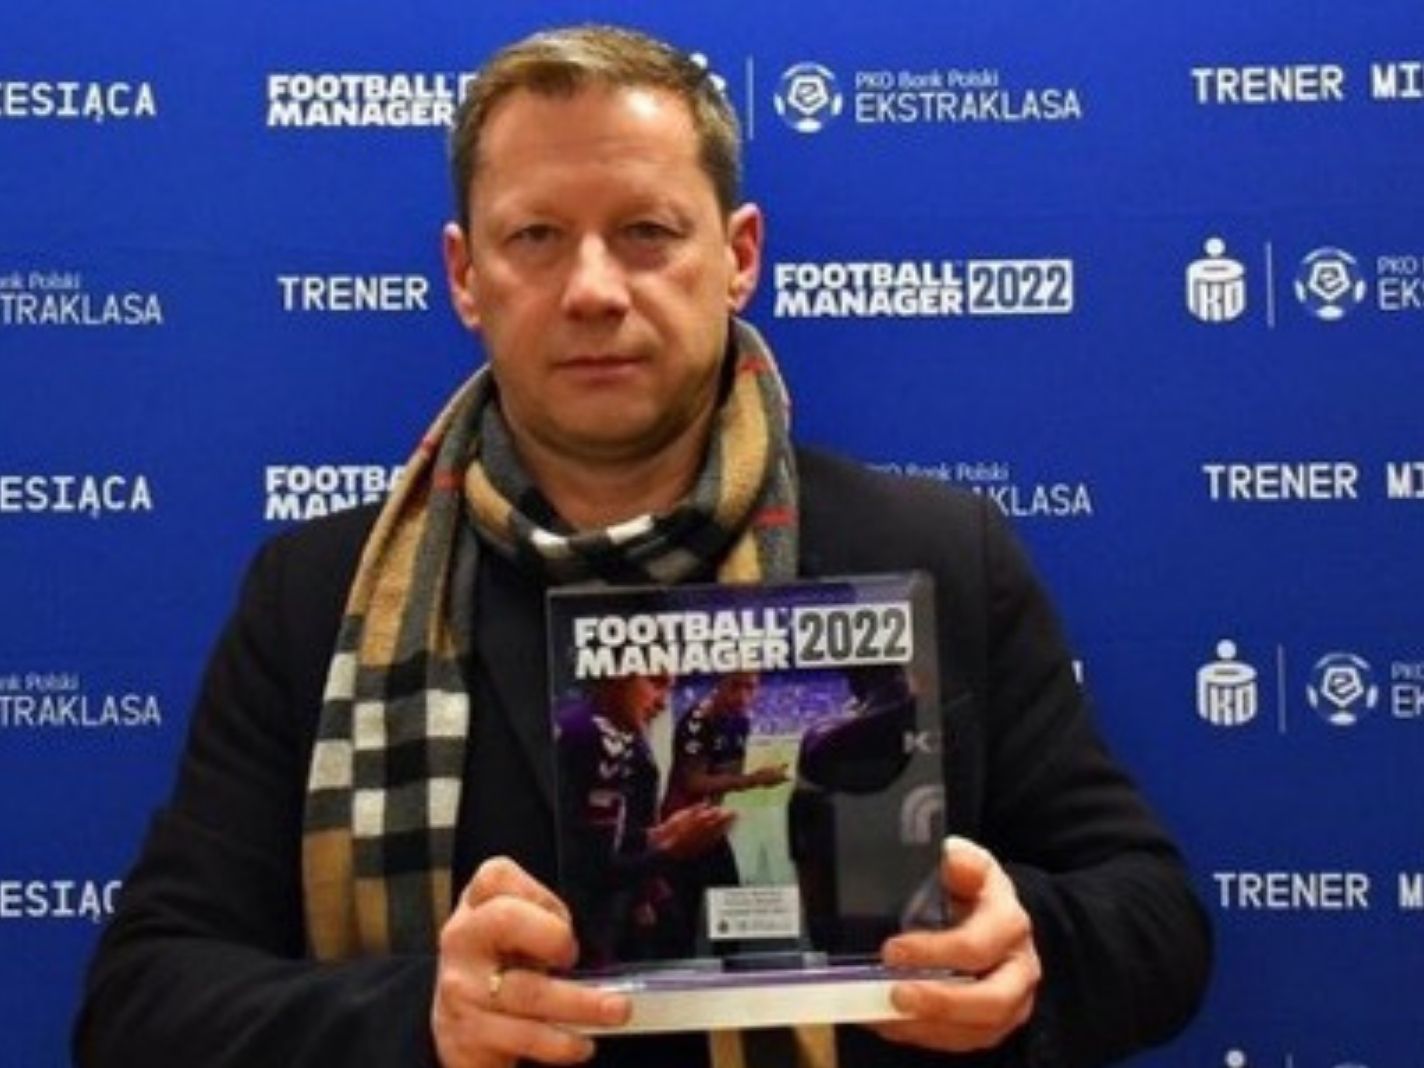 Polish league gives away Football Manager 22 as MOTM award